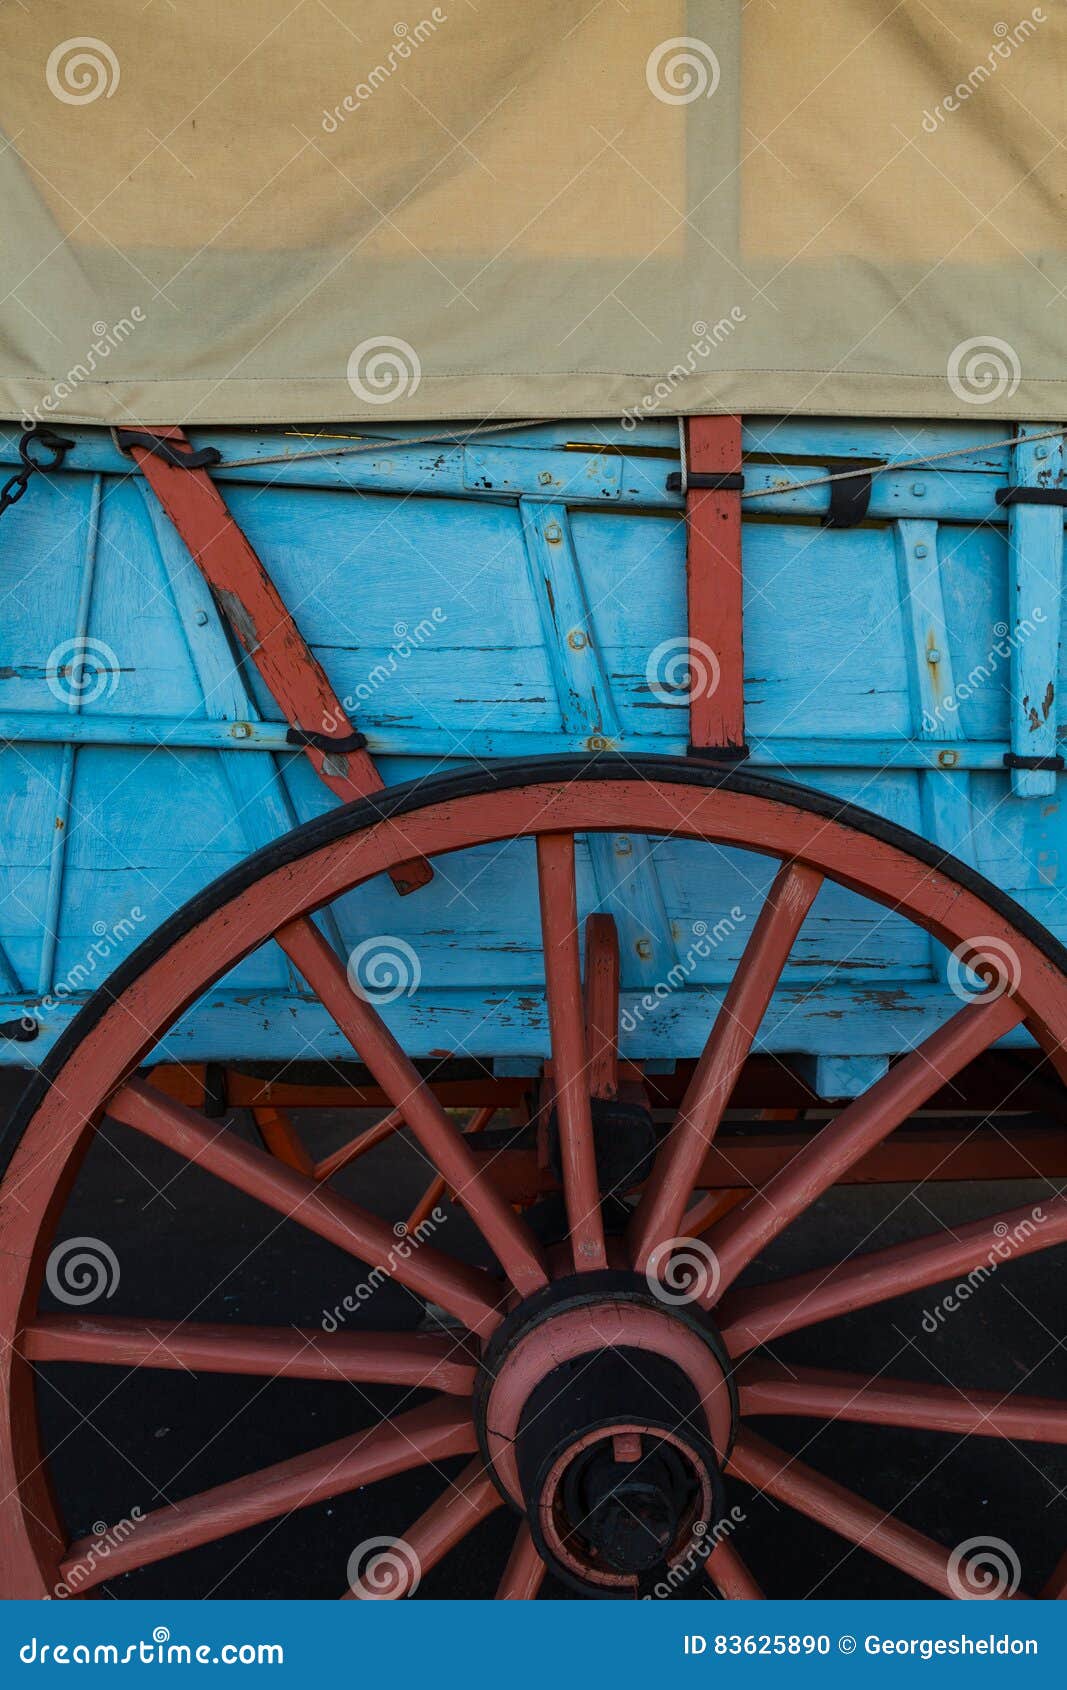 conestoga wagon wheel